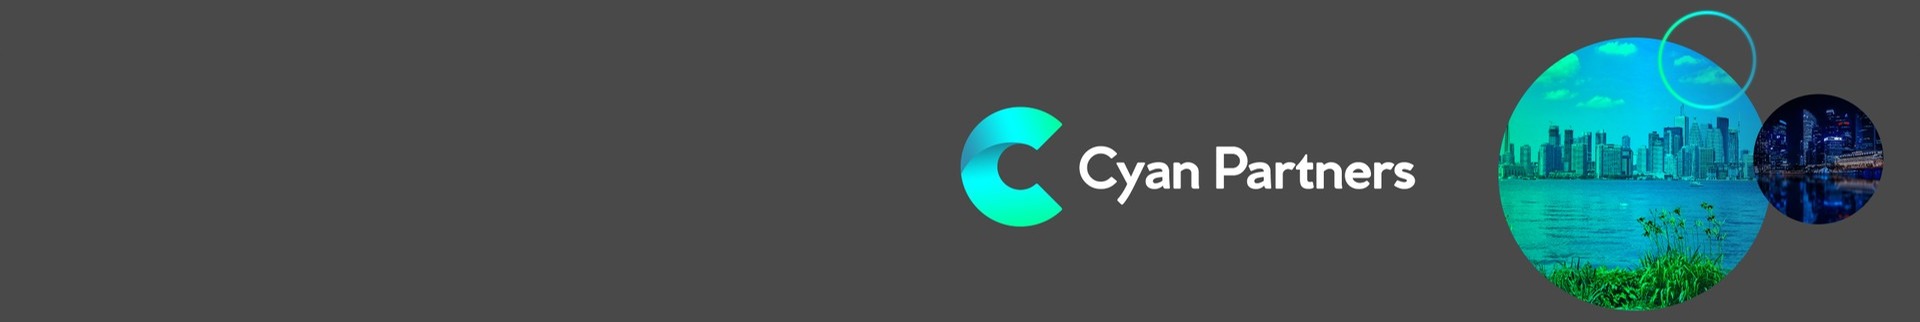 Cyan Partners background